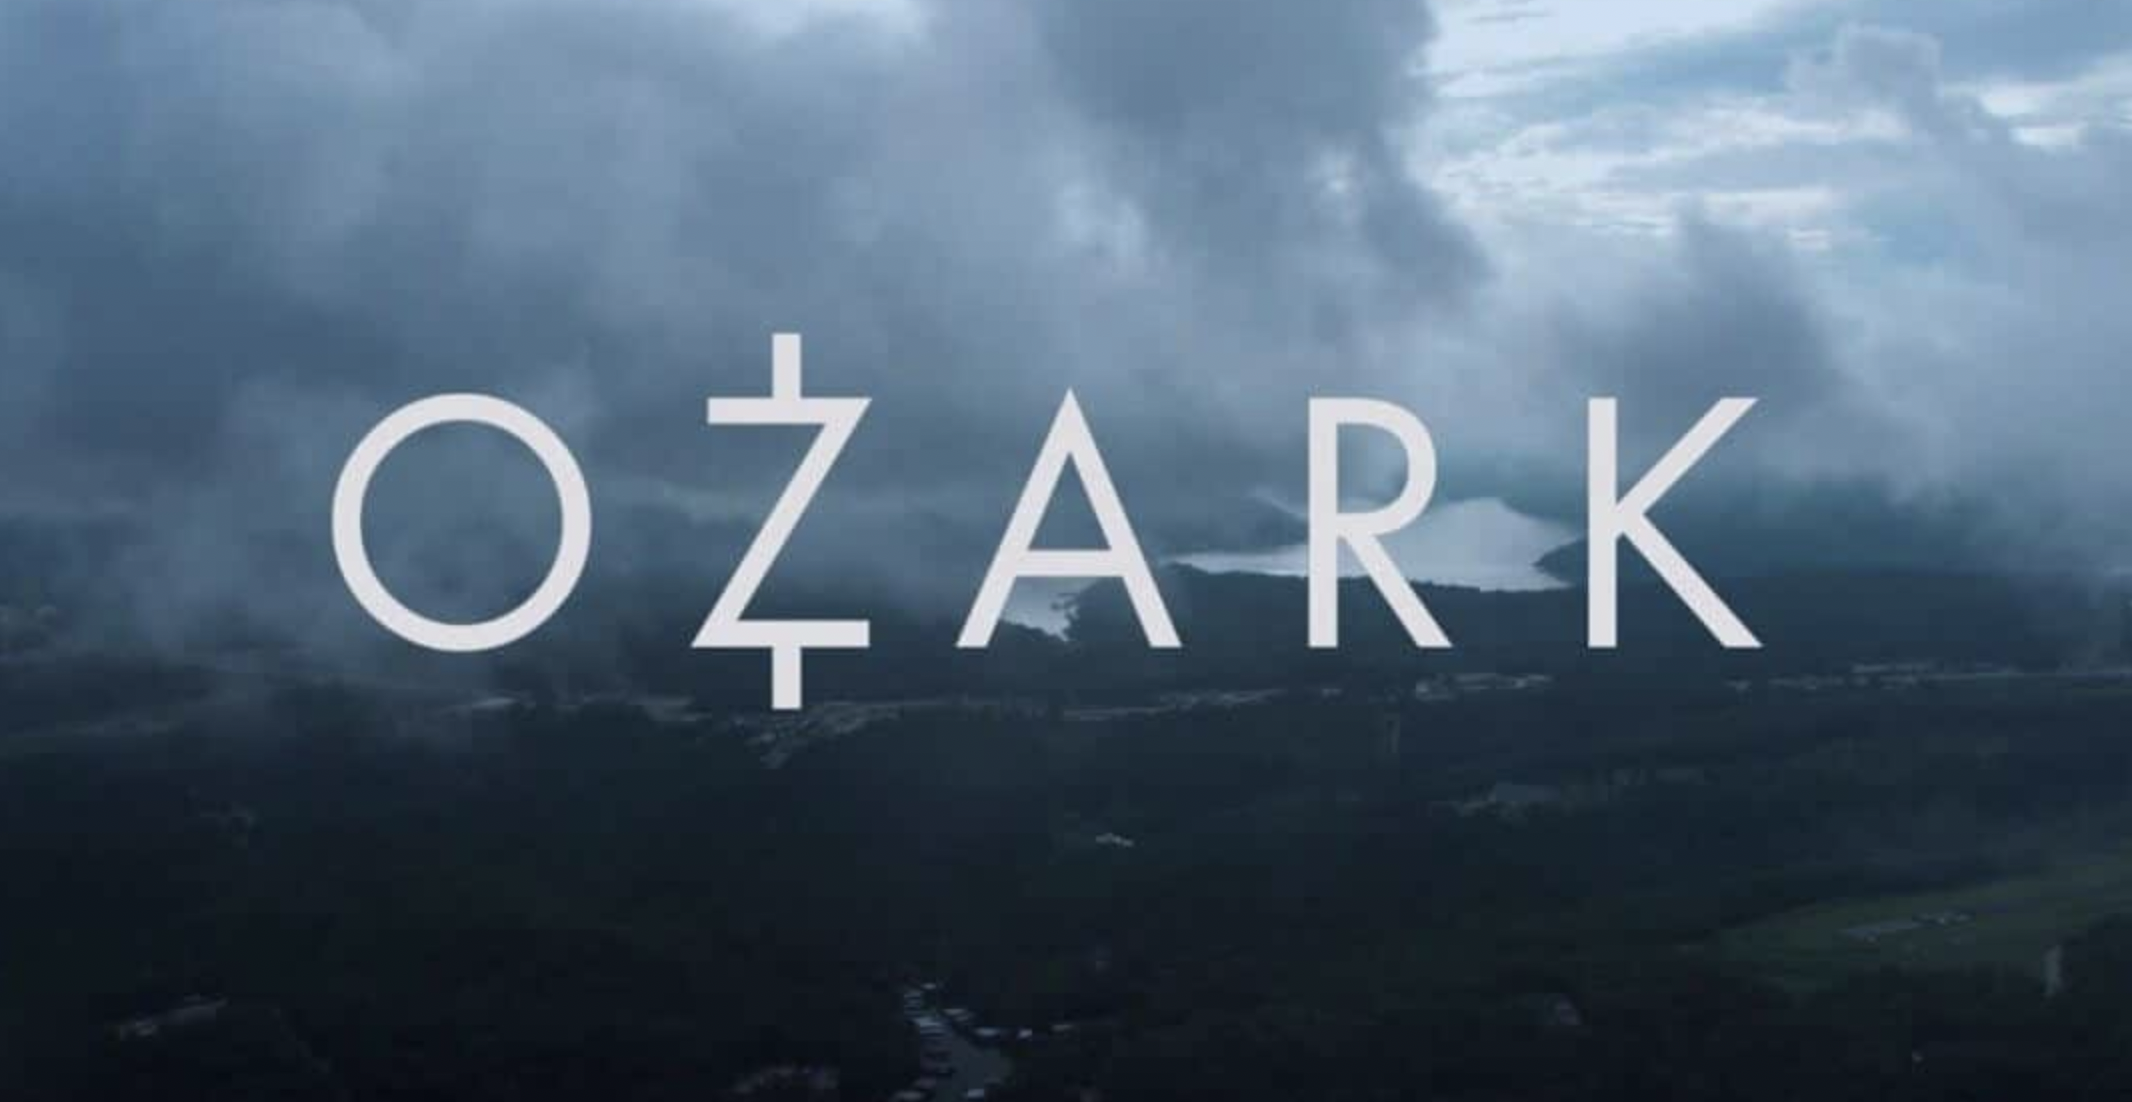 ozark cast